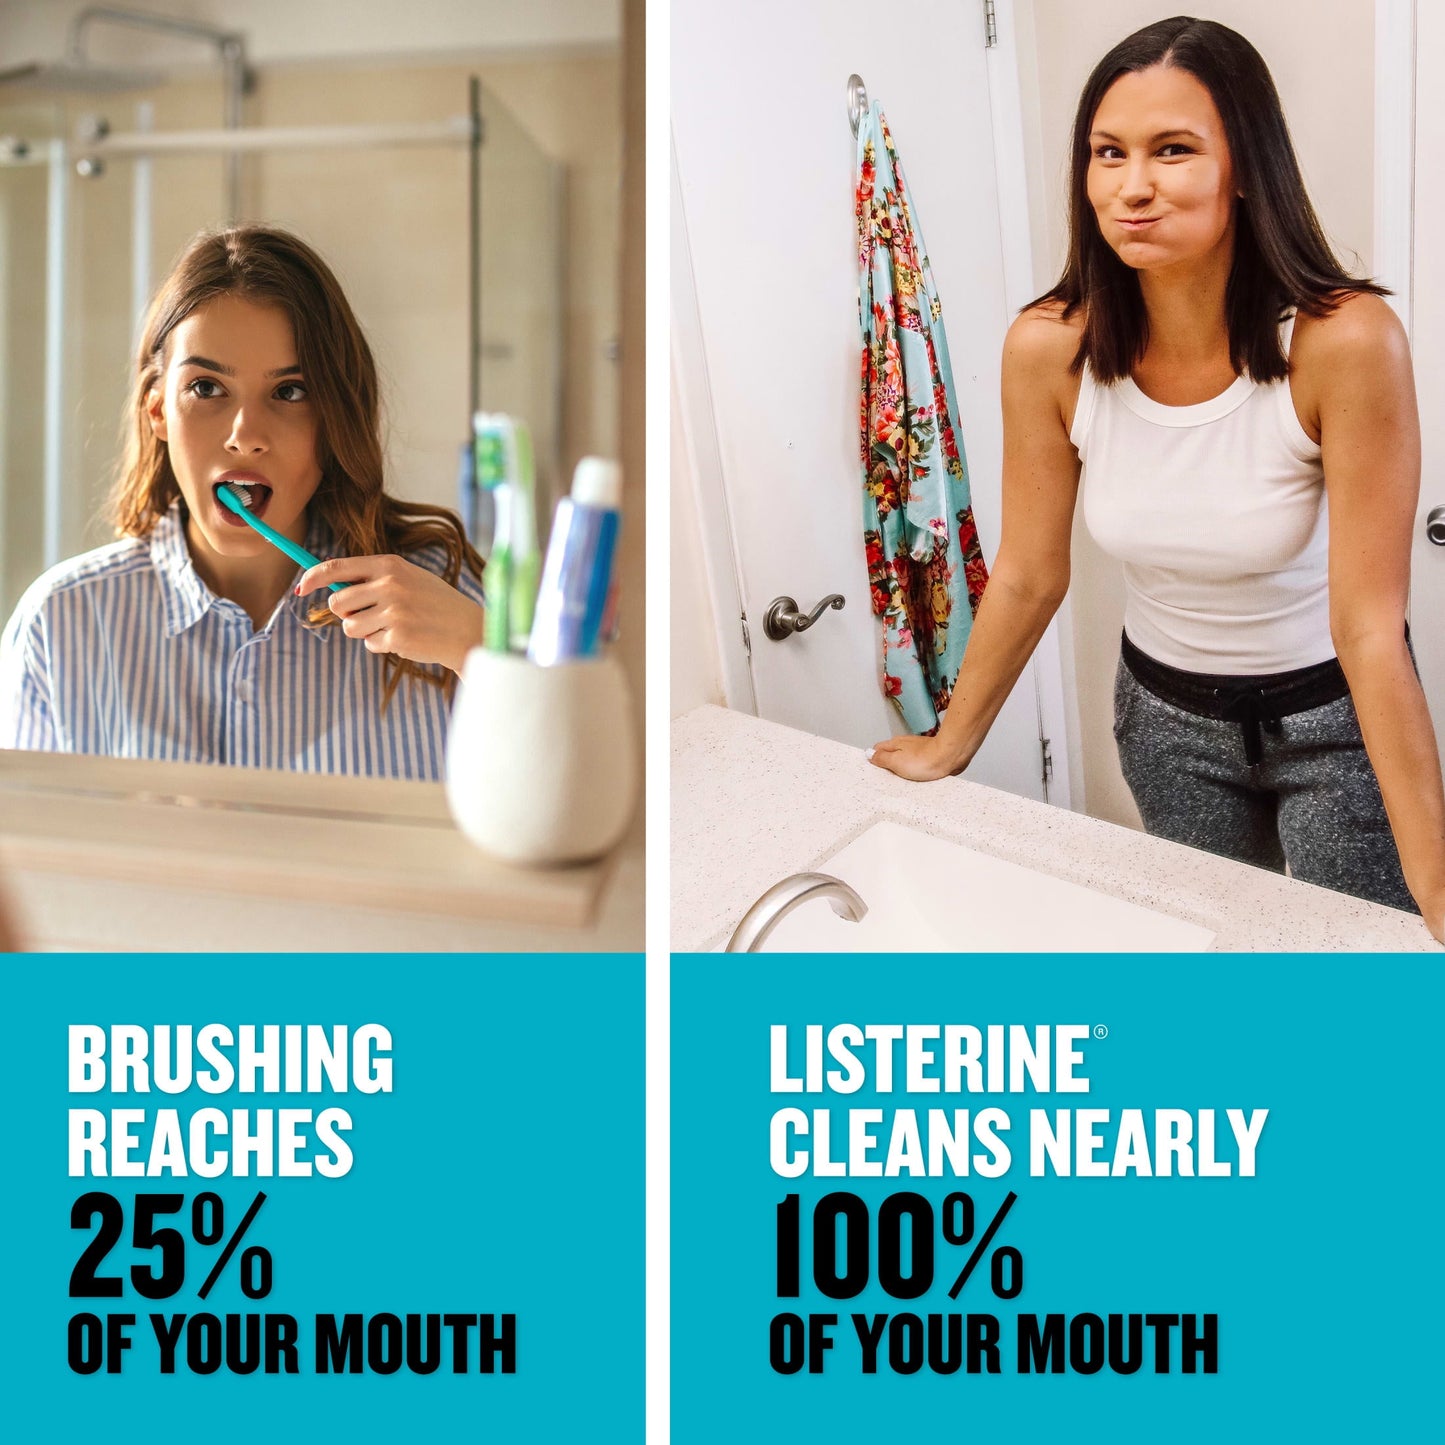 Listerine Zero Alcohol Free Oral Care Mouthwash for Bad Breath, Cool Mint, 1 L